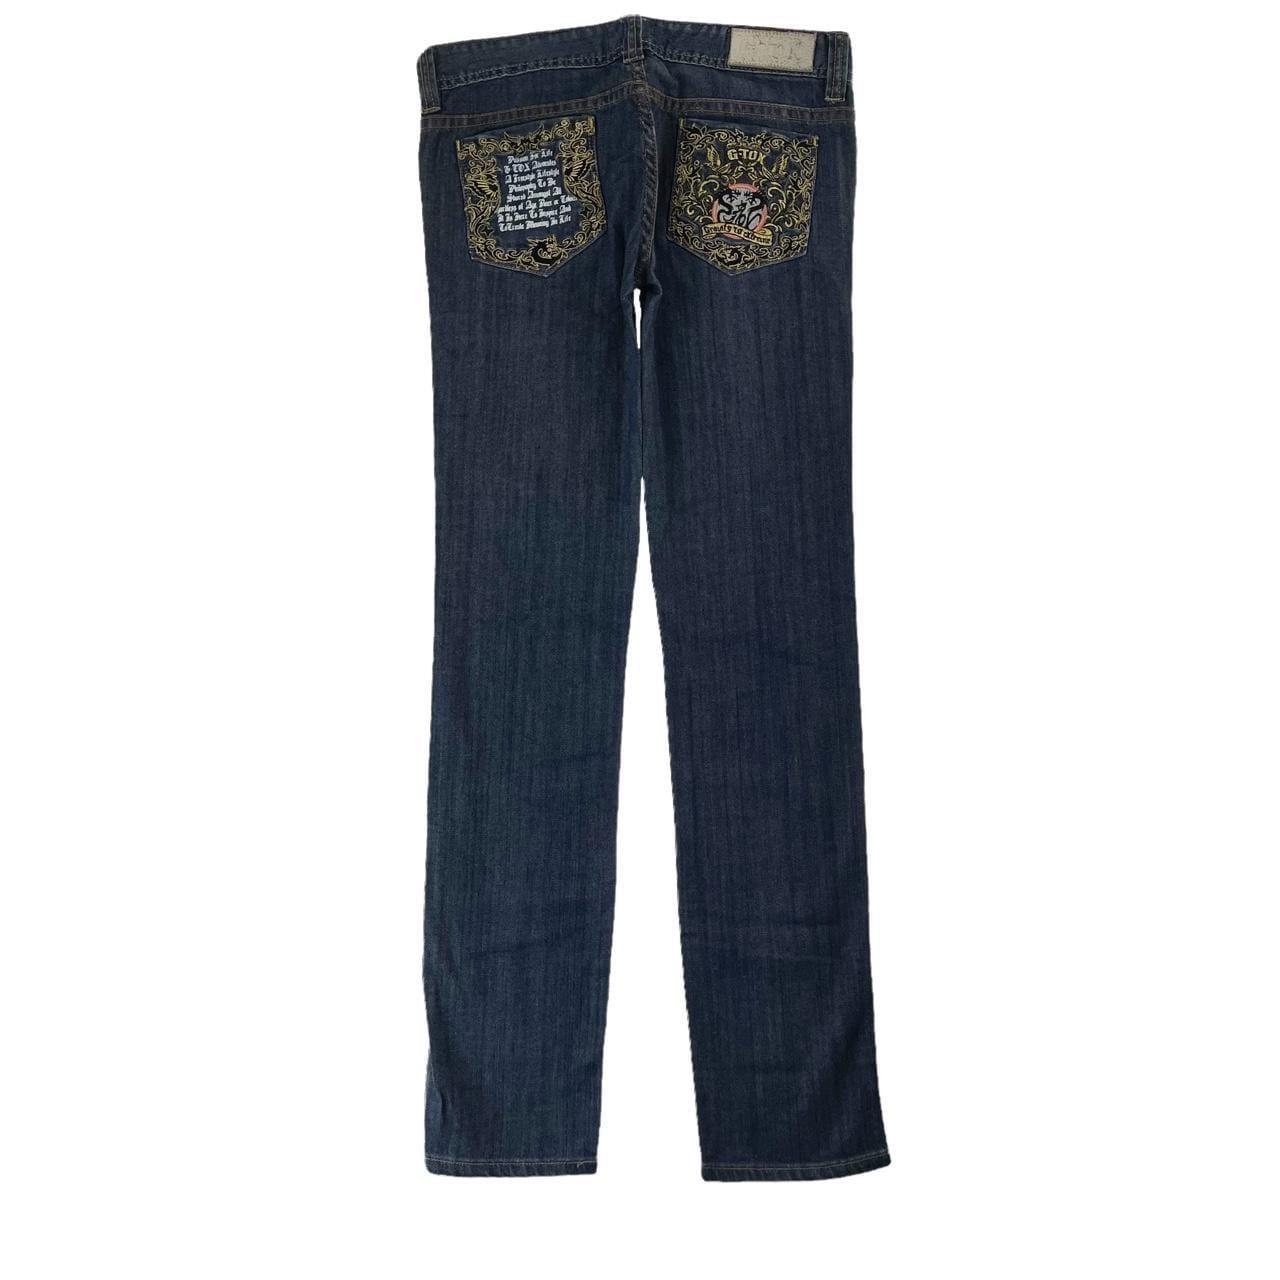 Vintage Dragon Japanese denim jeans trousers W36 - Known Source